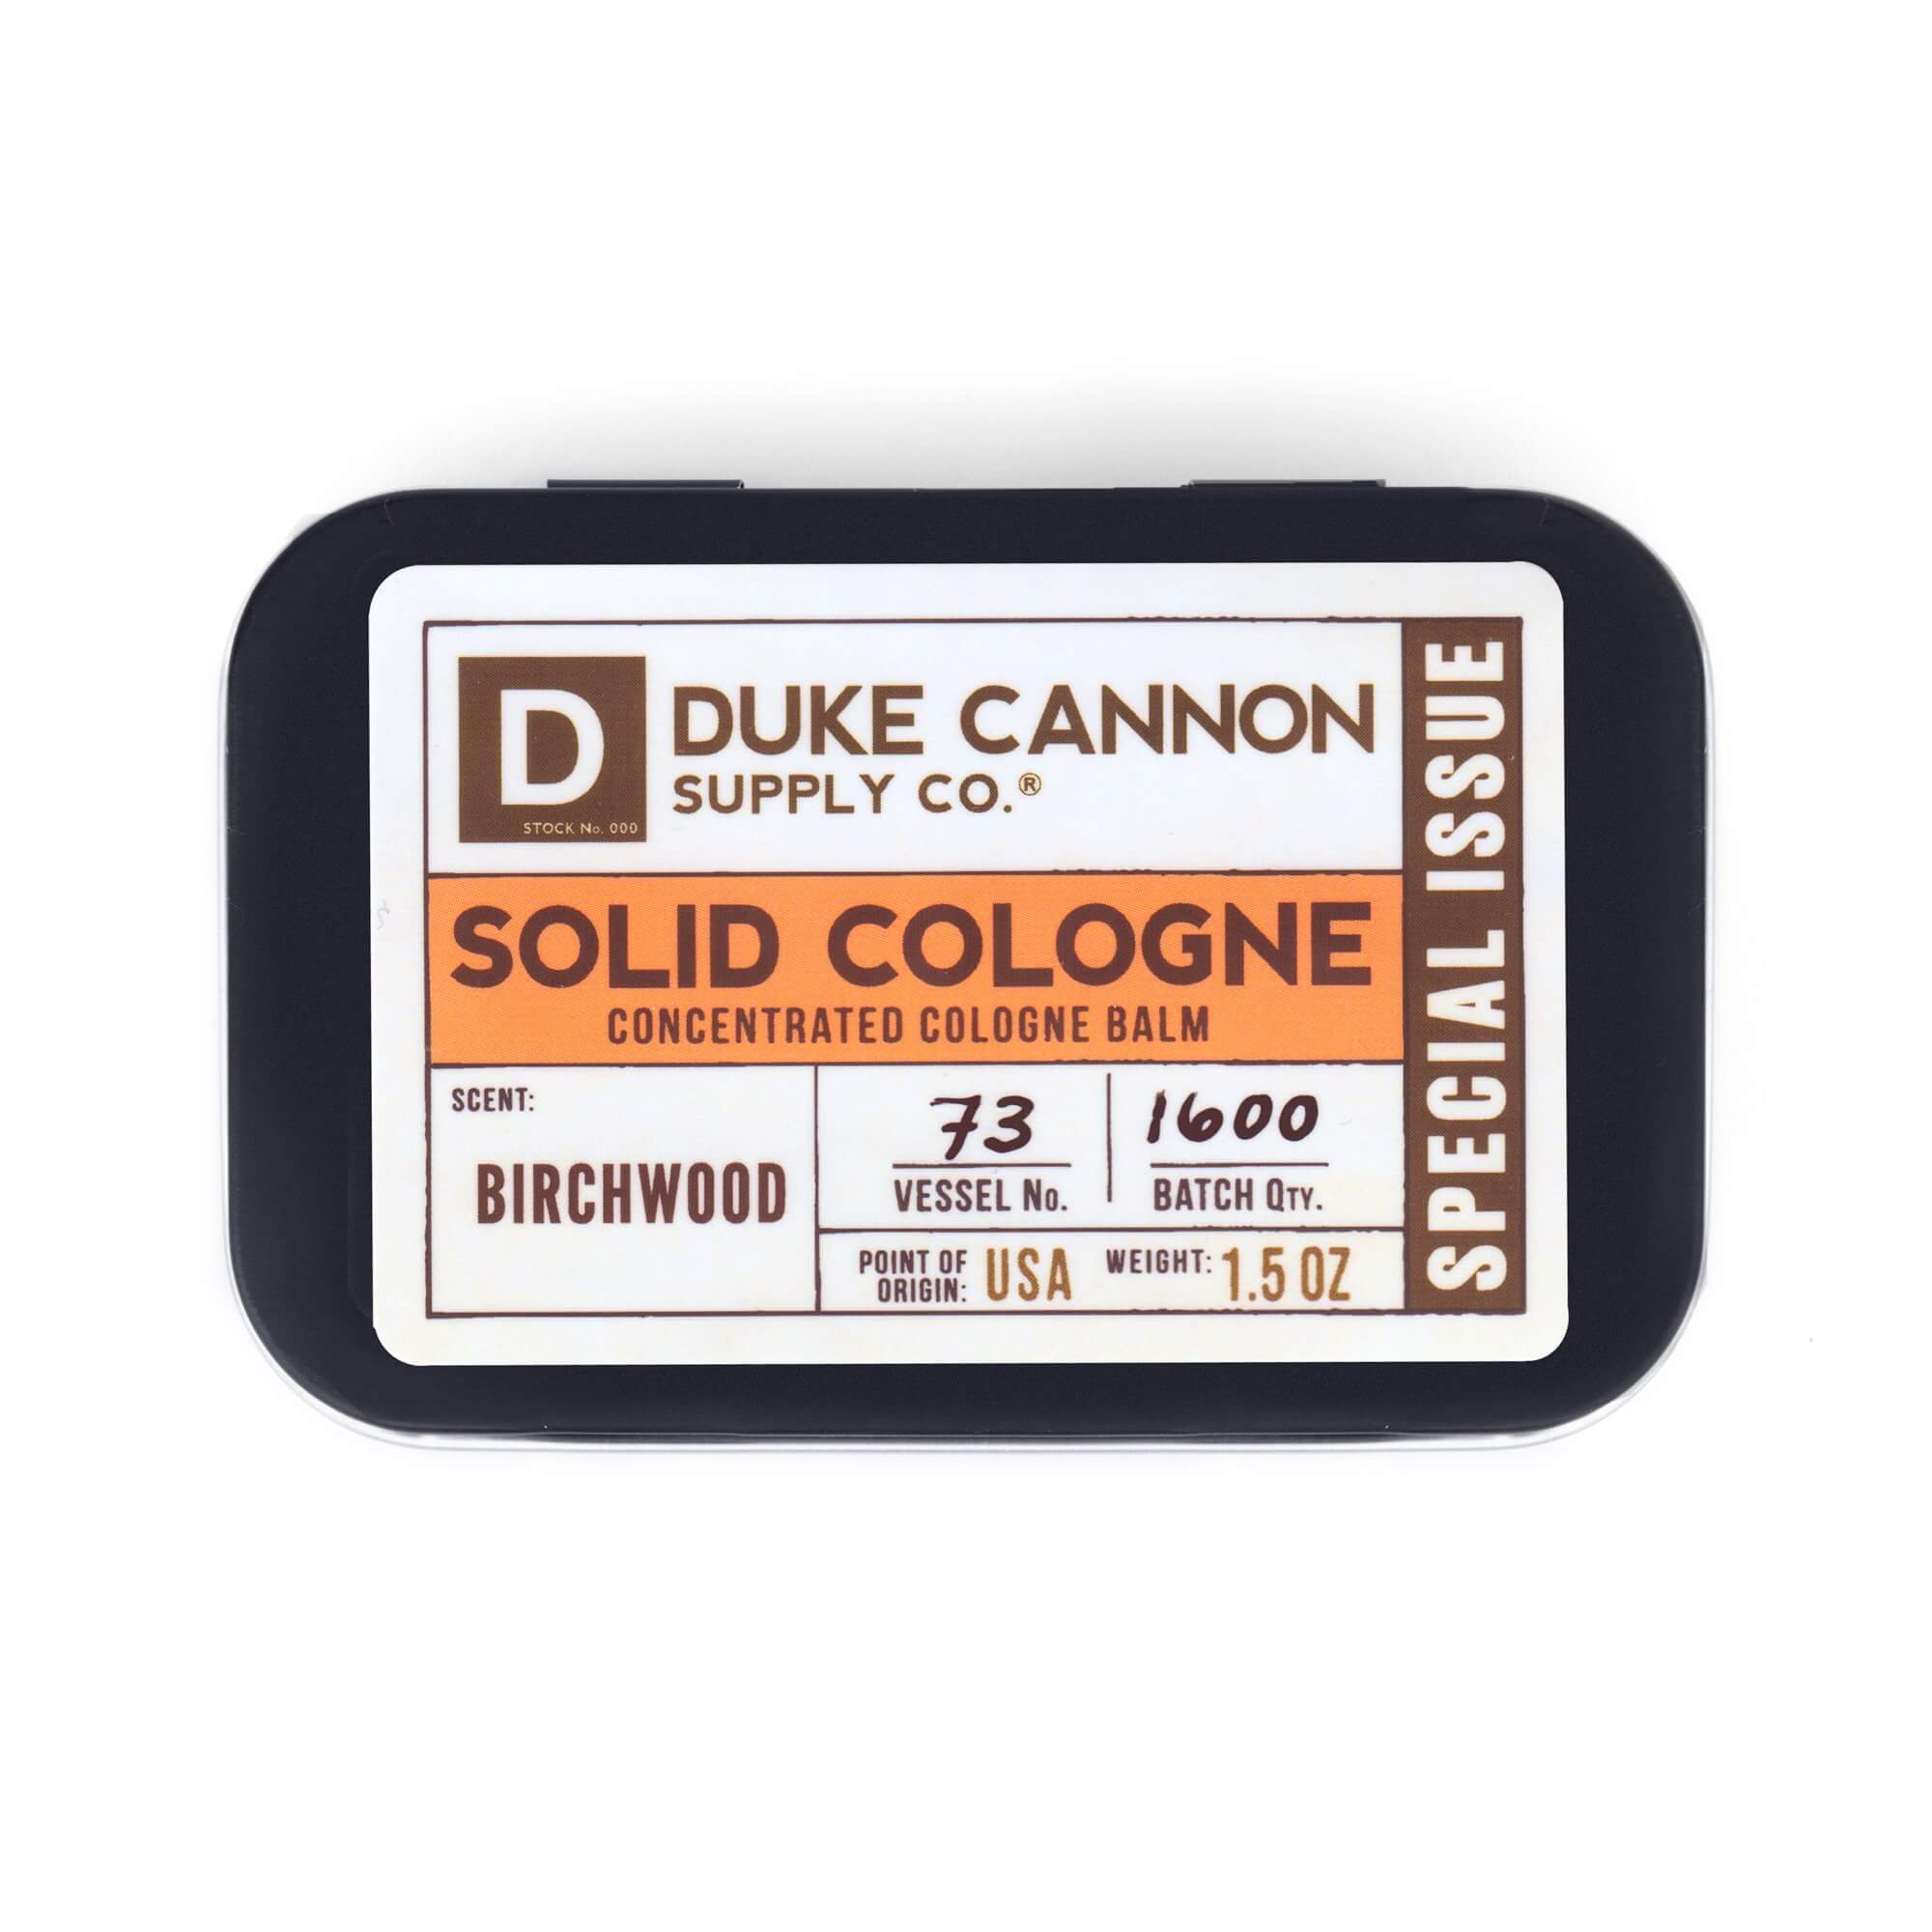 Duke Cannon Solid Parfume, Birchwood